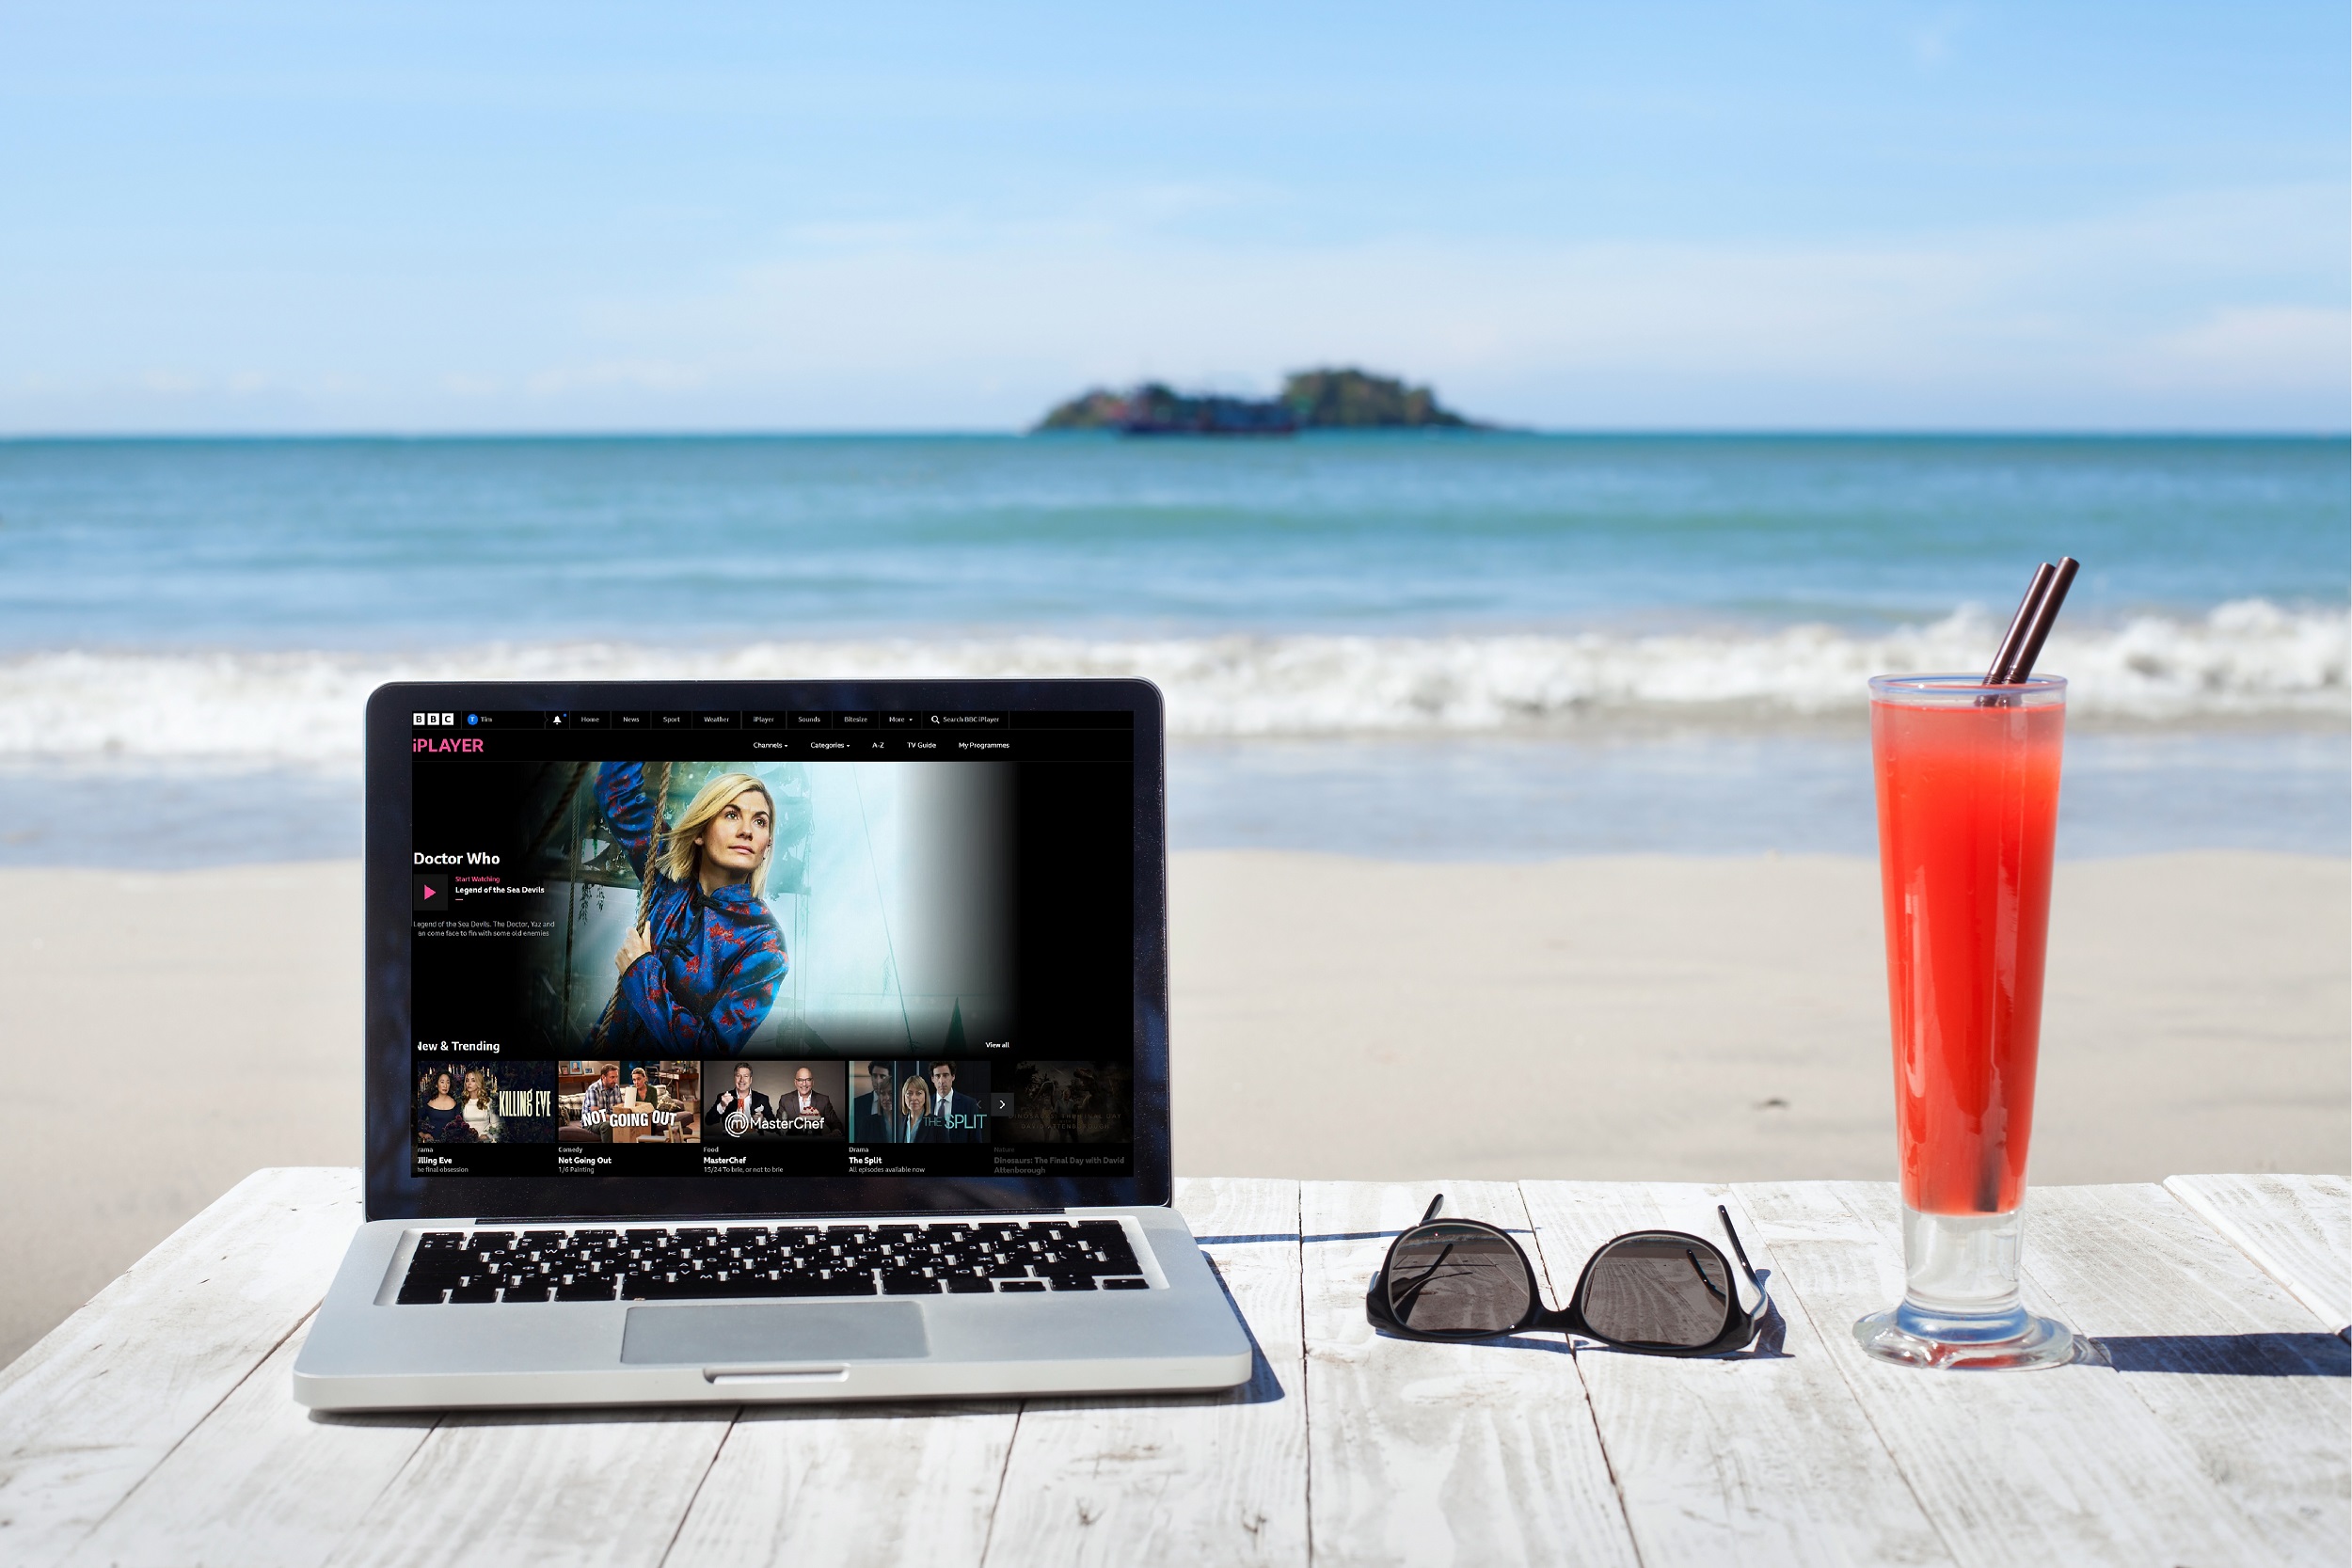 BBC iplayer abroad on the beach